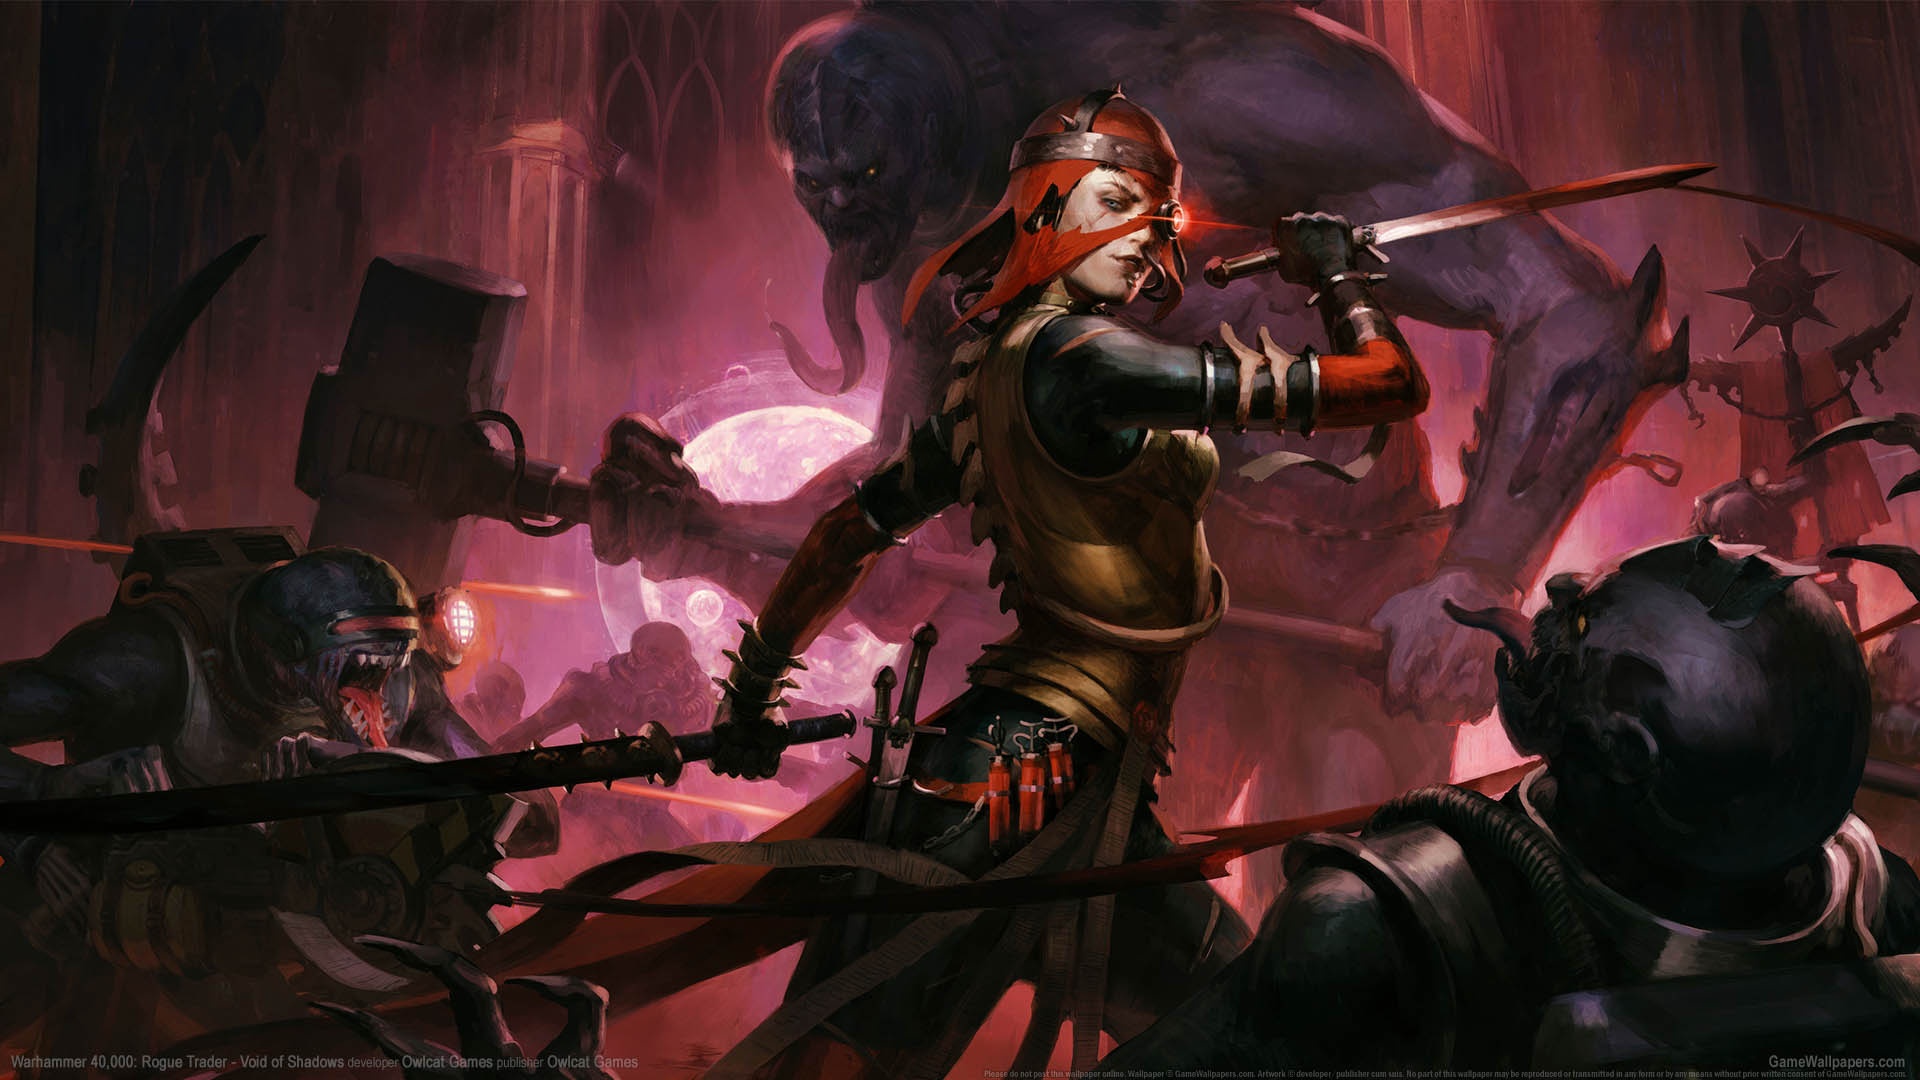 Warhammer 40,000: Rogue Trader - Void of Shadows fond d'cran 01 1920x1080